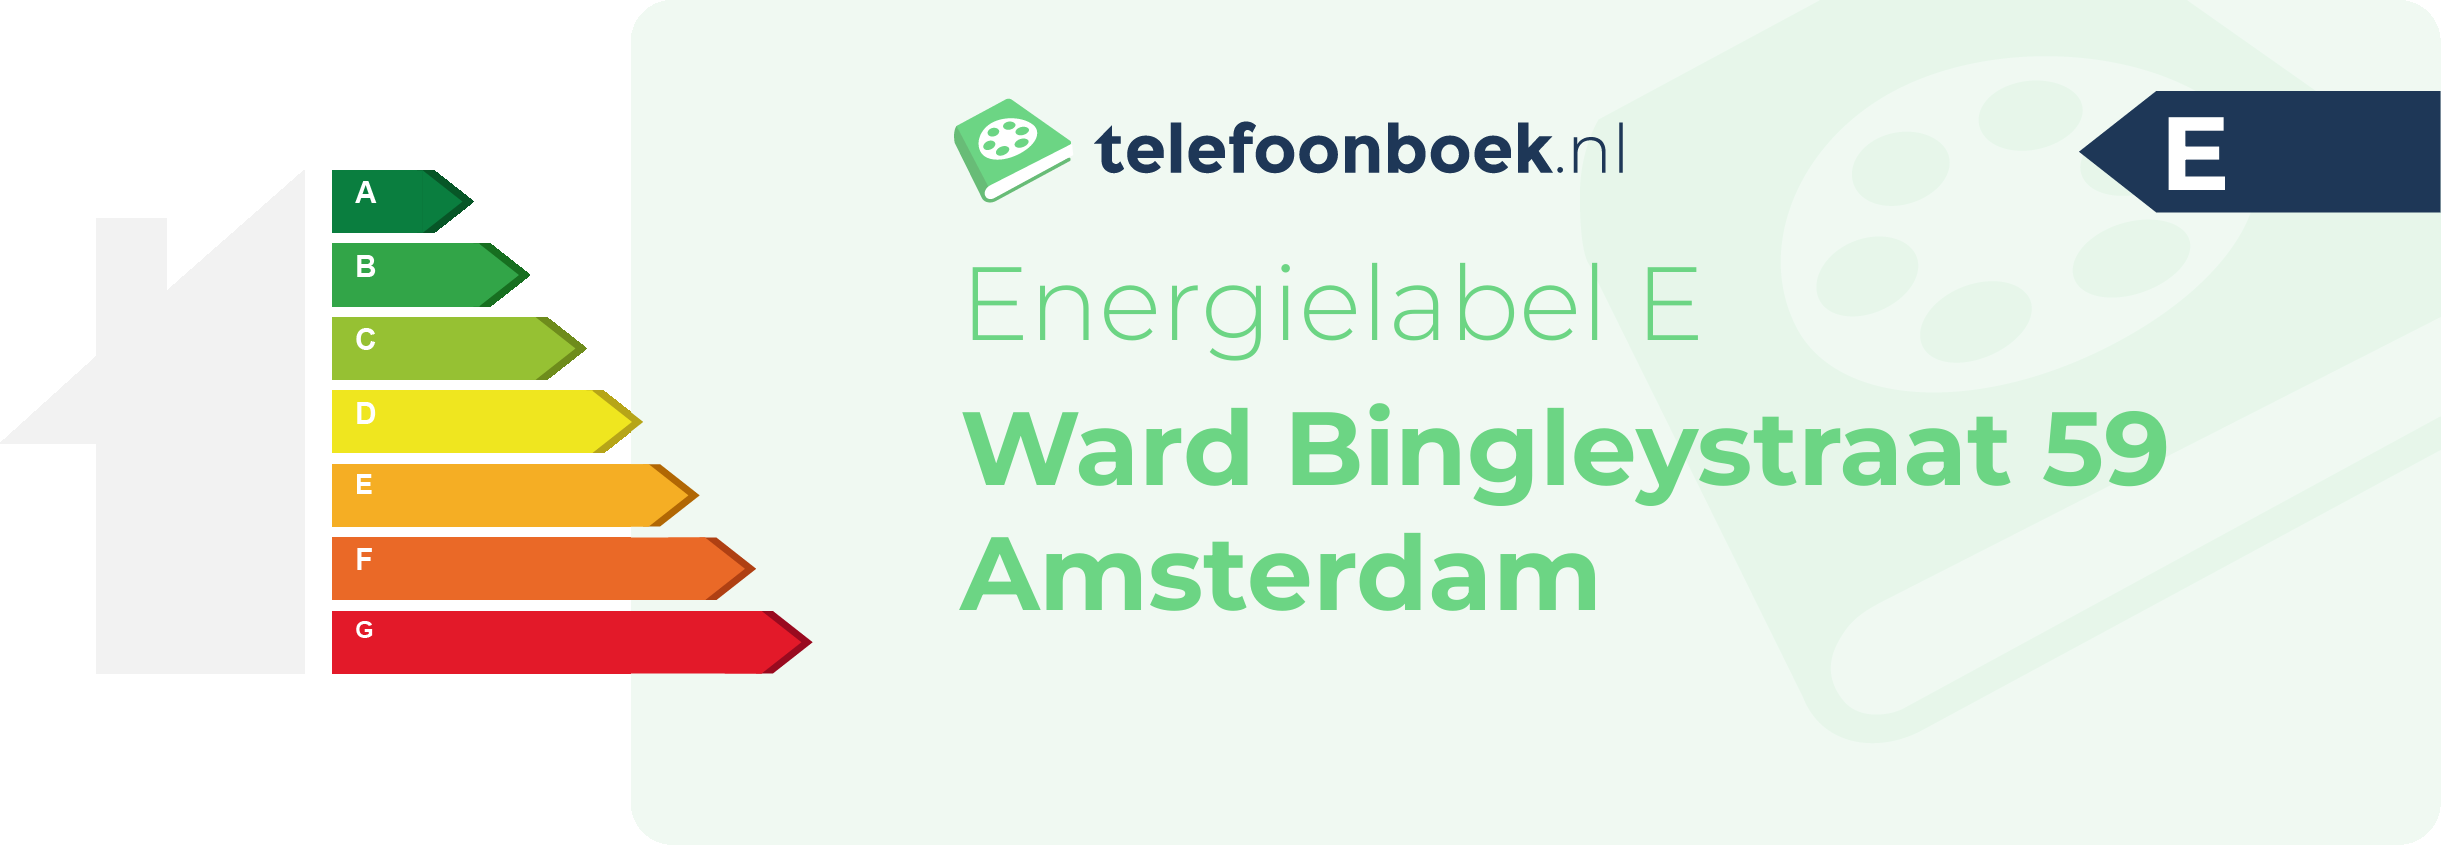 Energielabel Ward Bingleystraat 59 Amsterdam